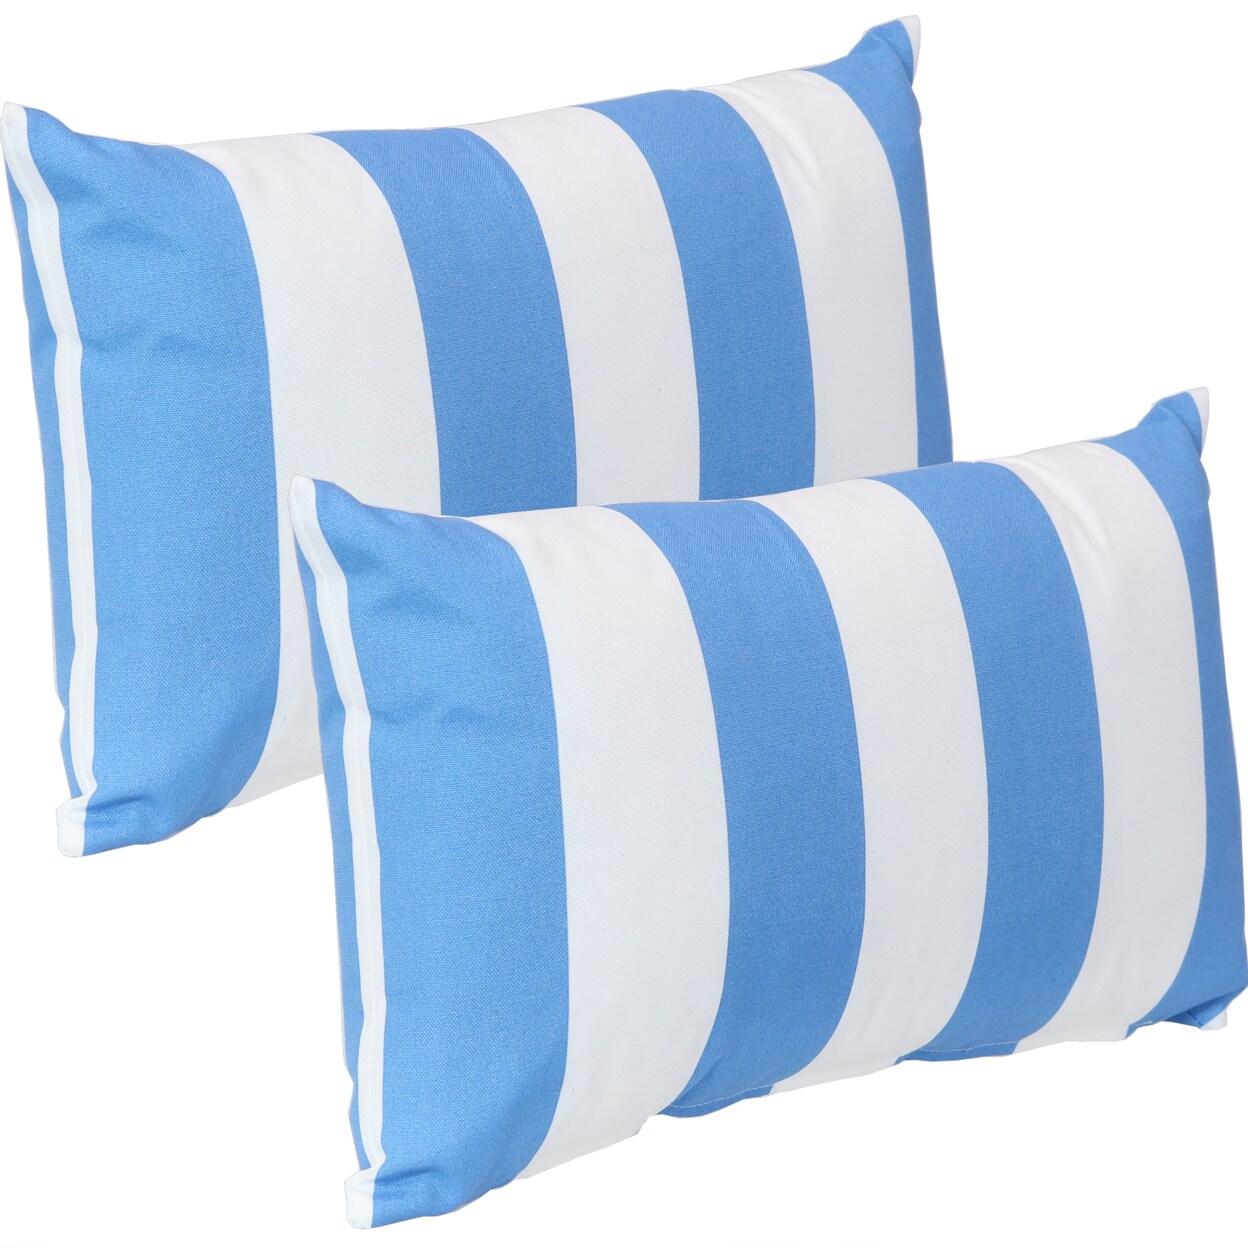 Sunnydaze Decor Sunnydaze 2 Outdoor Lumbar Throw Pillows - 12 x 20-Inch - Beach-Bound Stripe